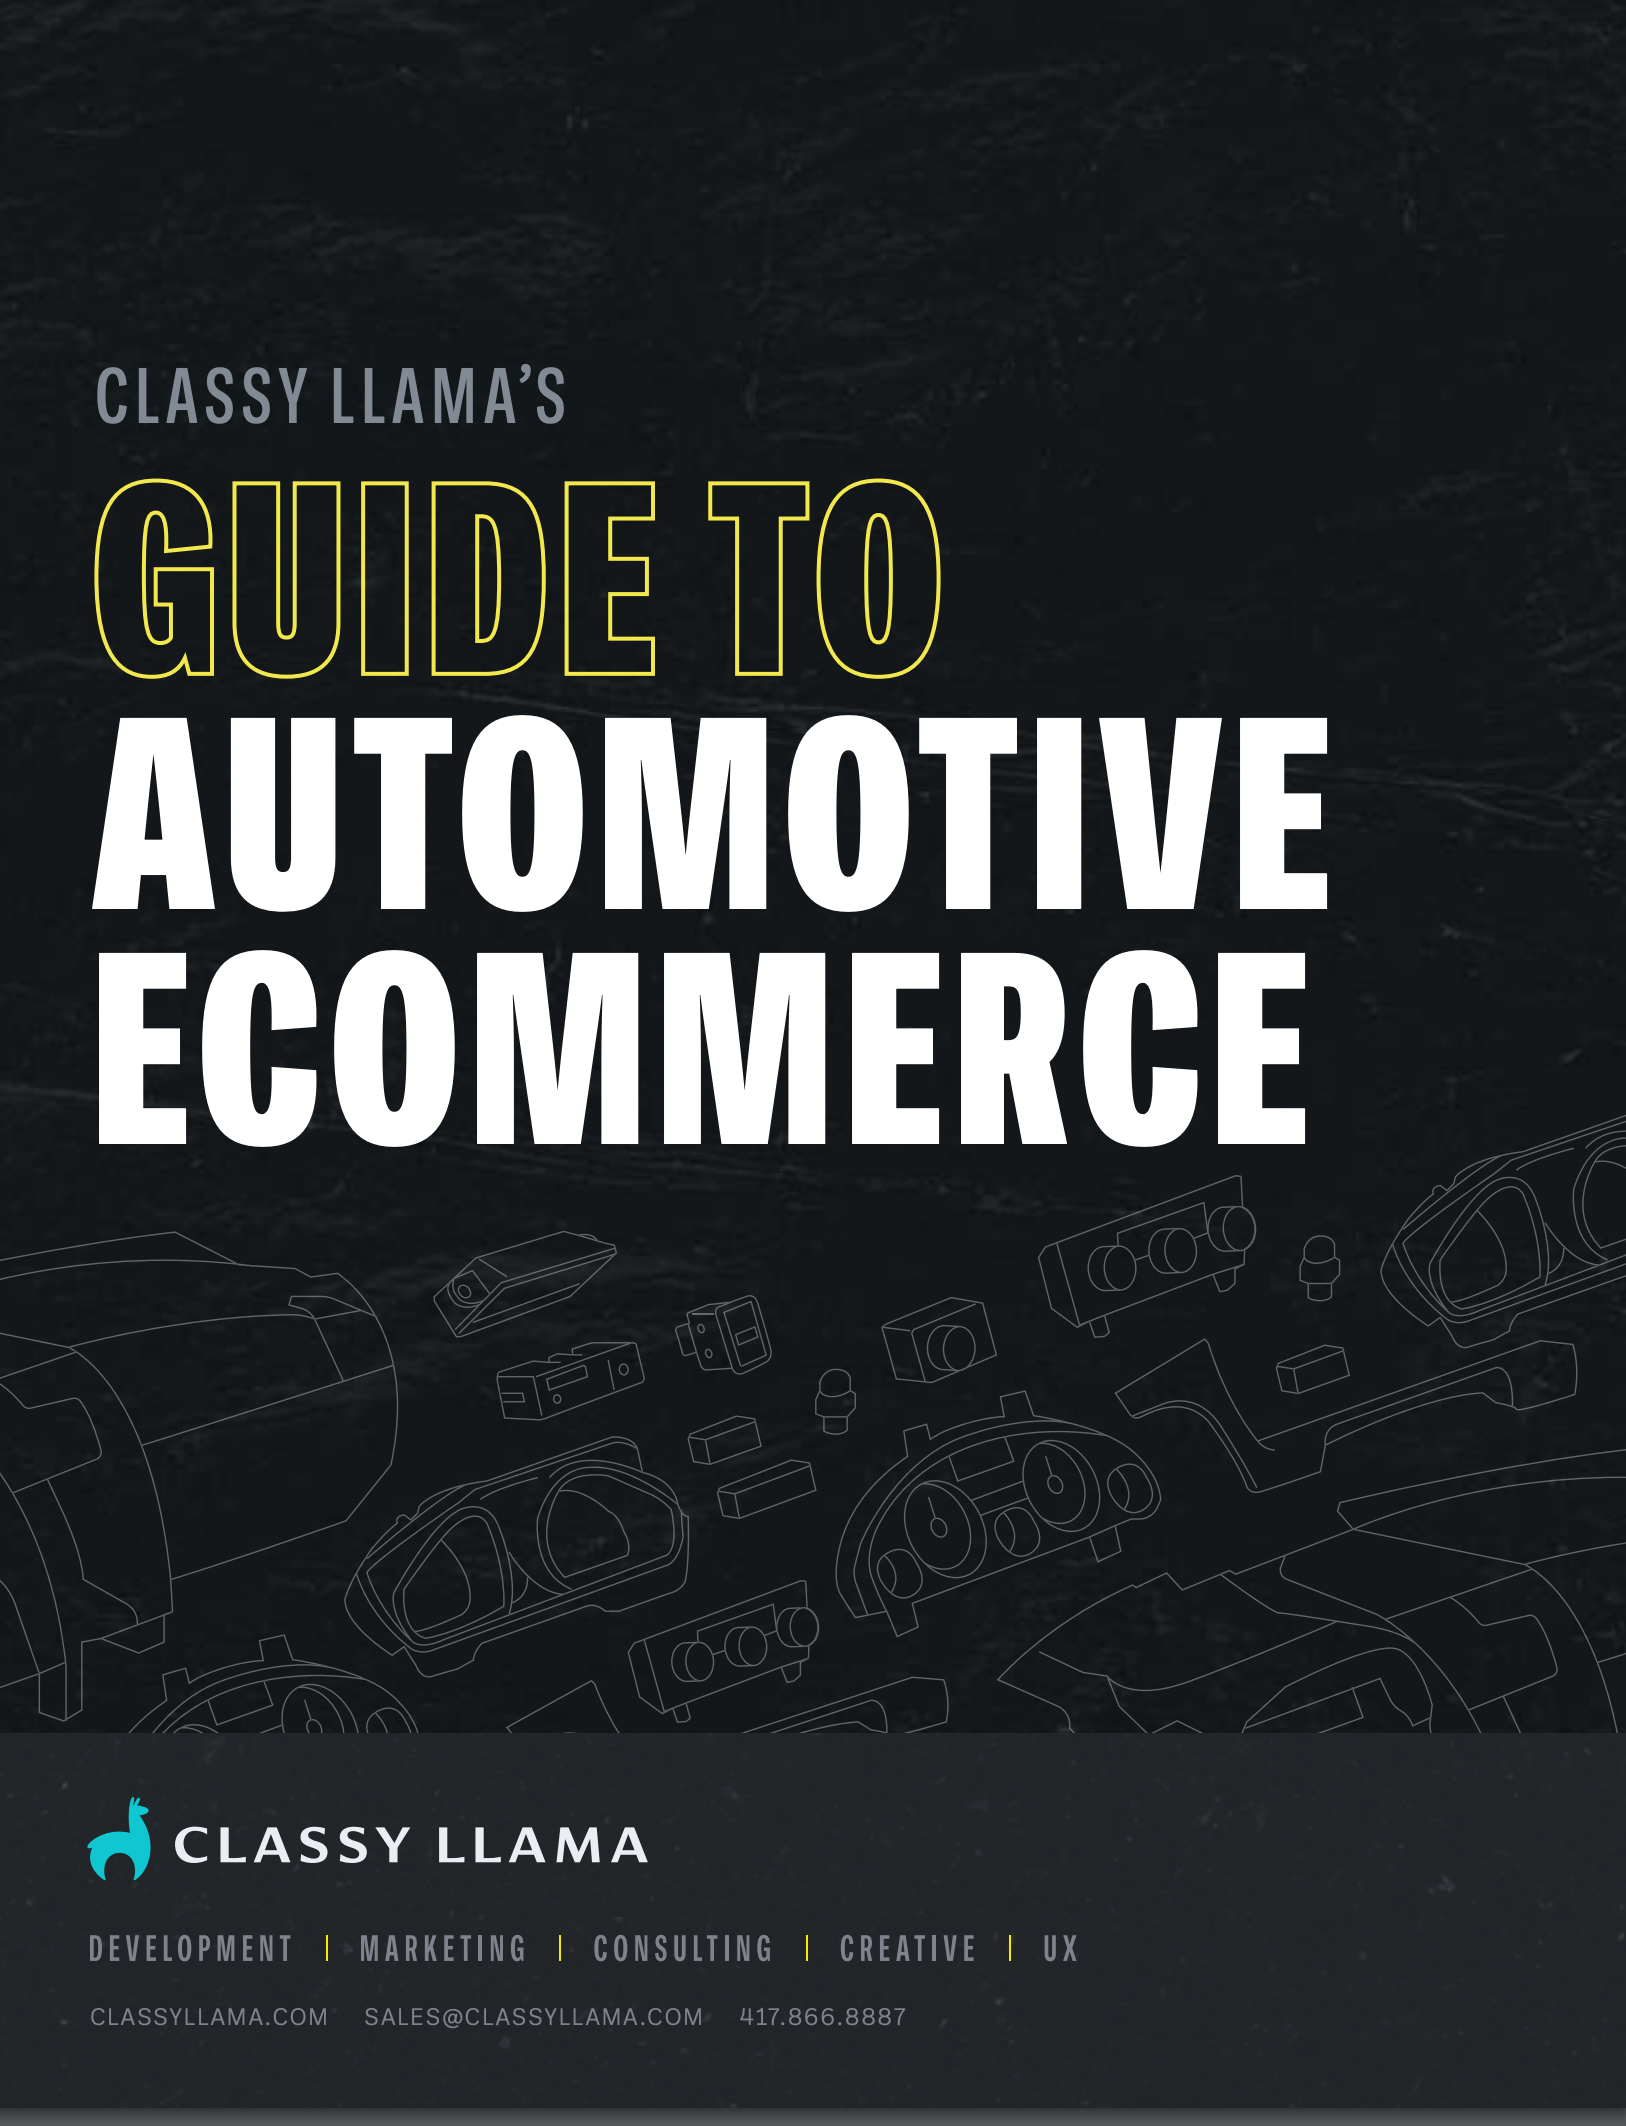 Classy Llama's Guide To Automotive eCommerce. Classy Llama. Development | Marketing | Consulting | Creative | UX. Classyllama.com sales@classyllama.com 417.866.8887